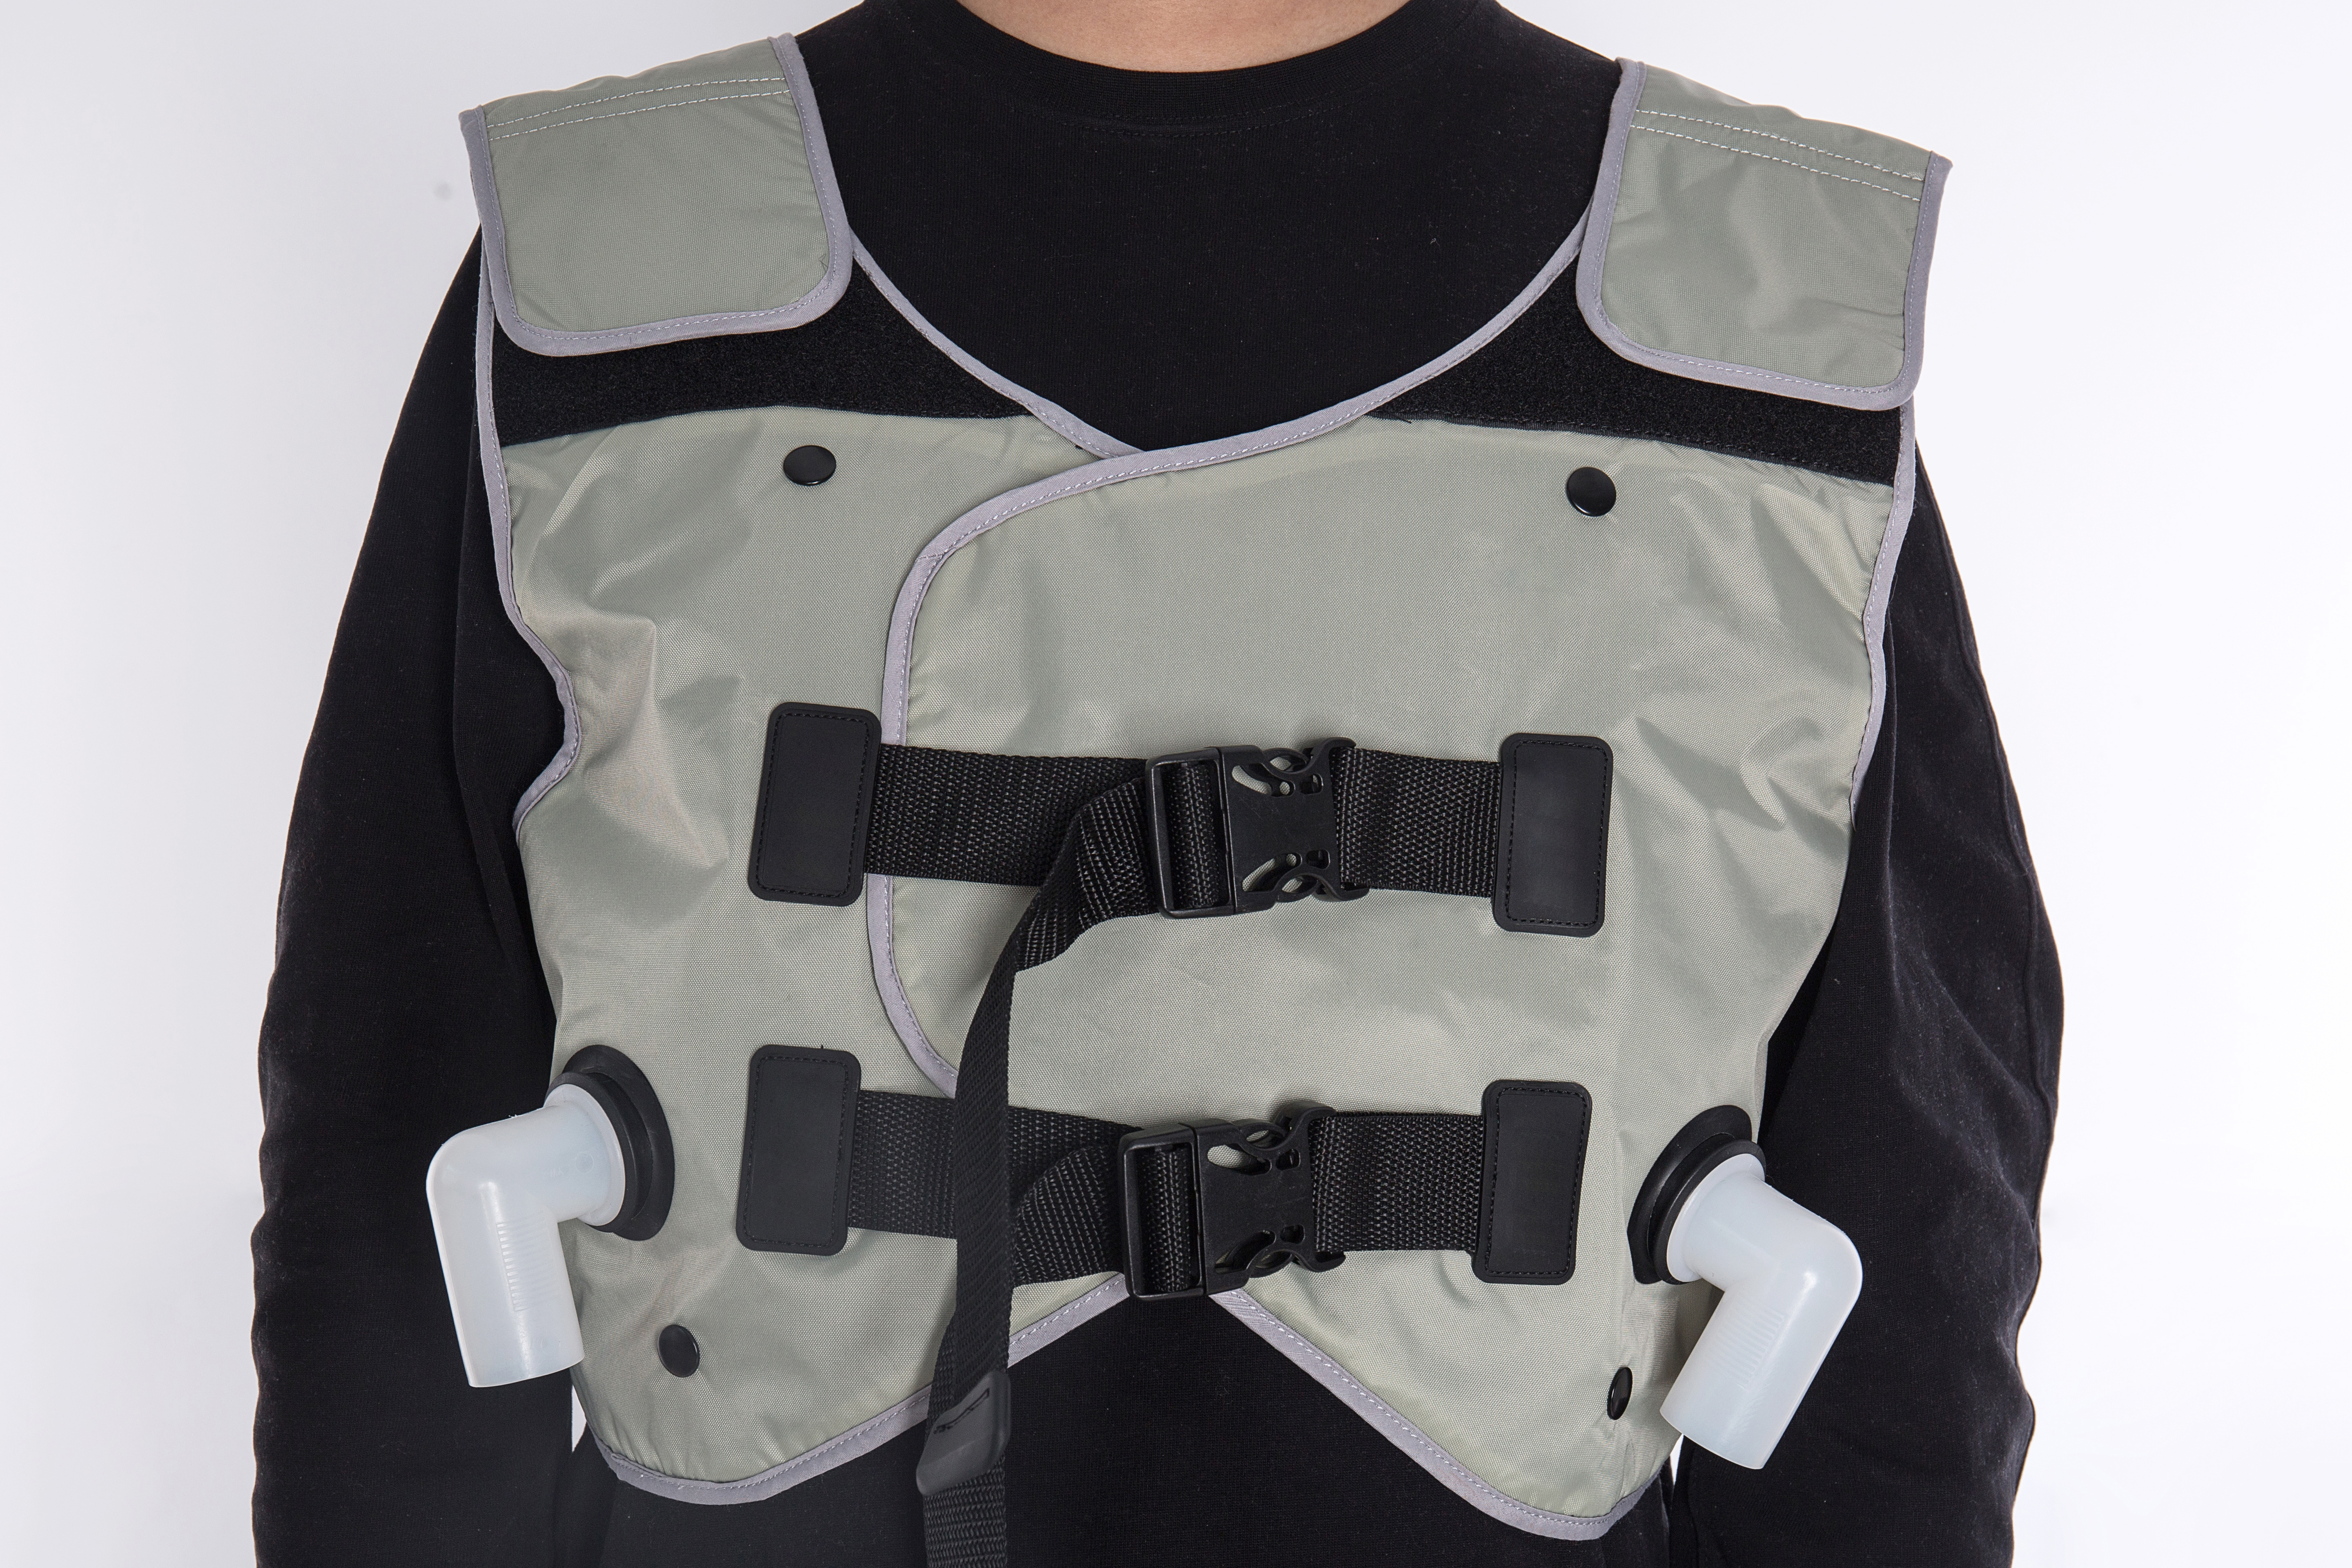 Expectoration Vest — အဆုတ်ပိုးဝင်နိုင်ခြေကို လျှော့ချရန် အစွမ်းထက်သော လက်ထောက်